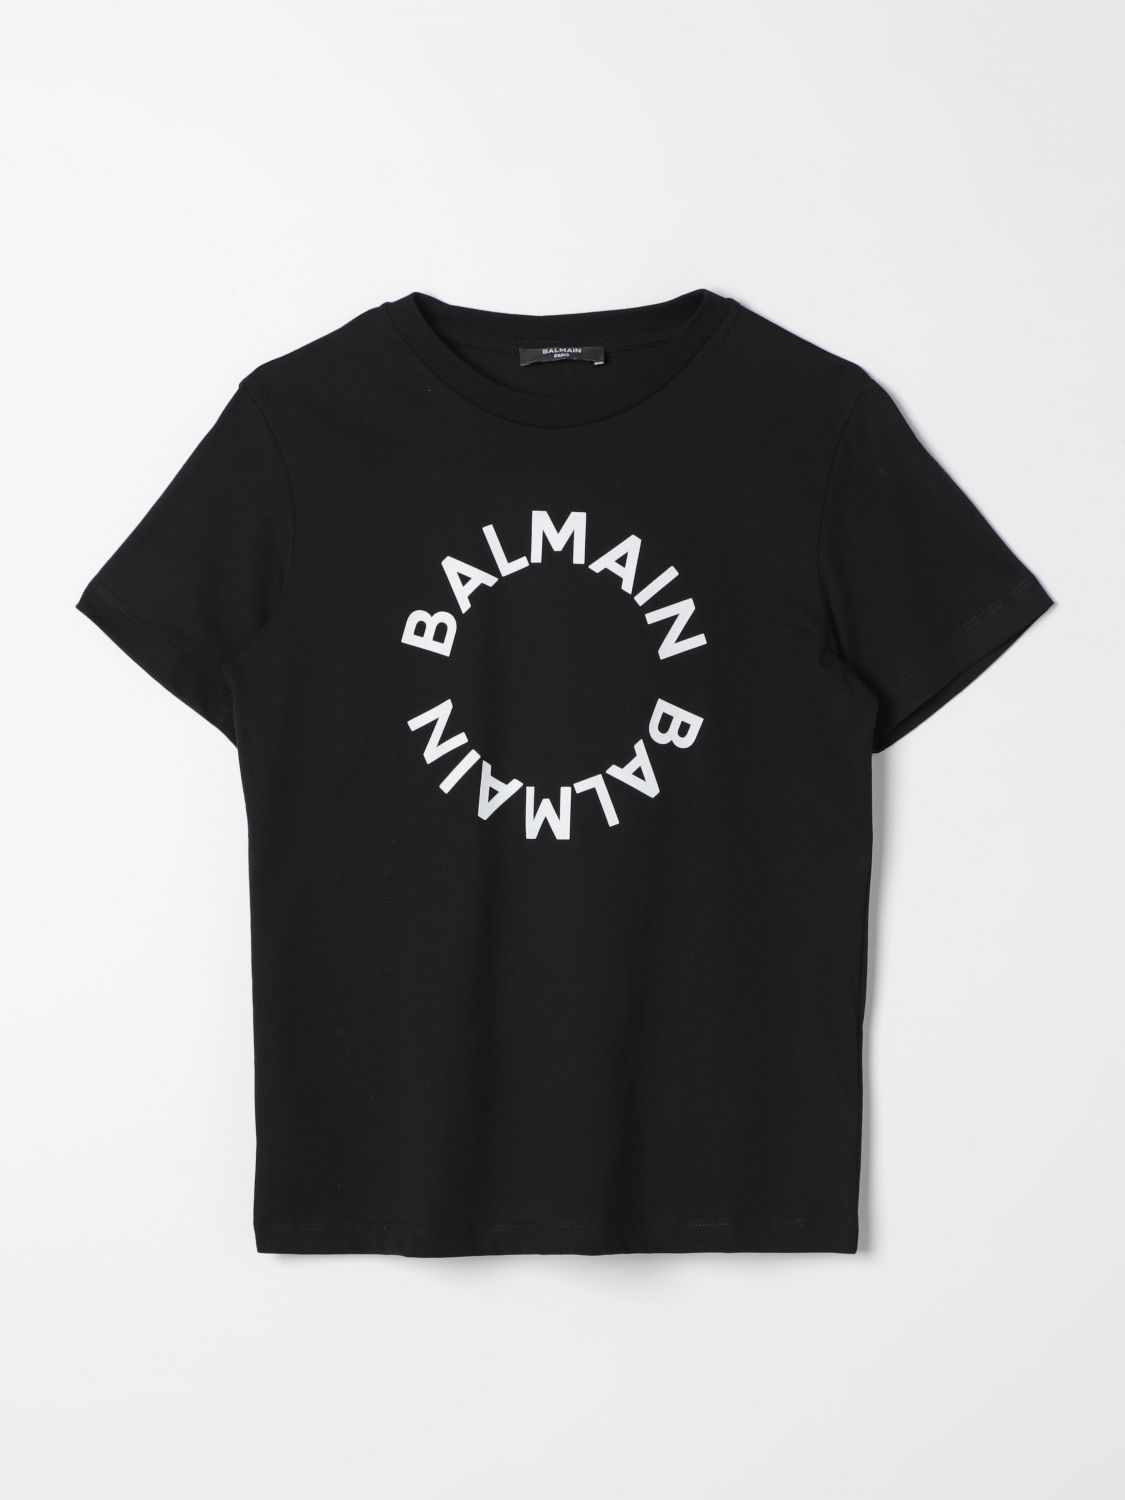 Balmain T-shirt  Kids Kids In Black